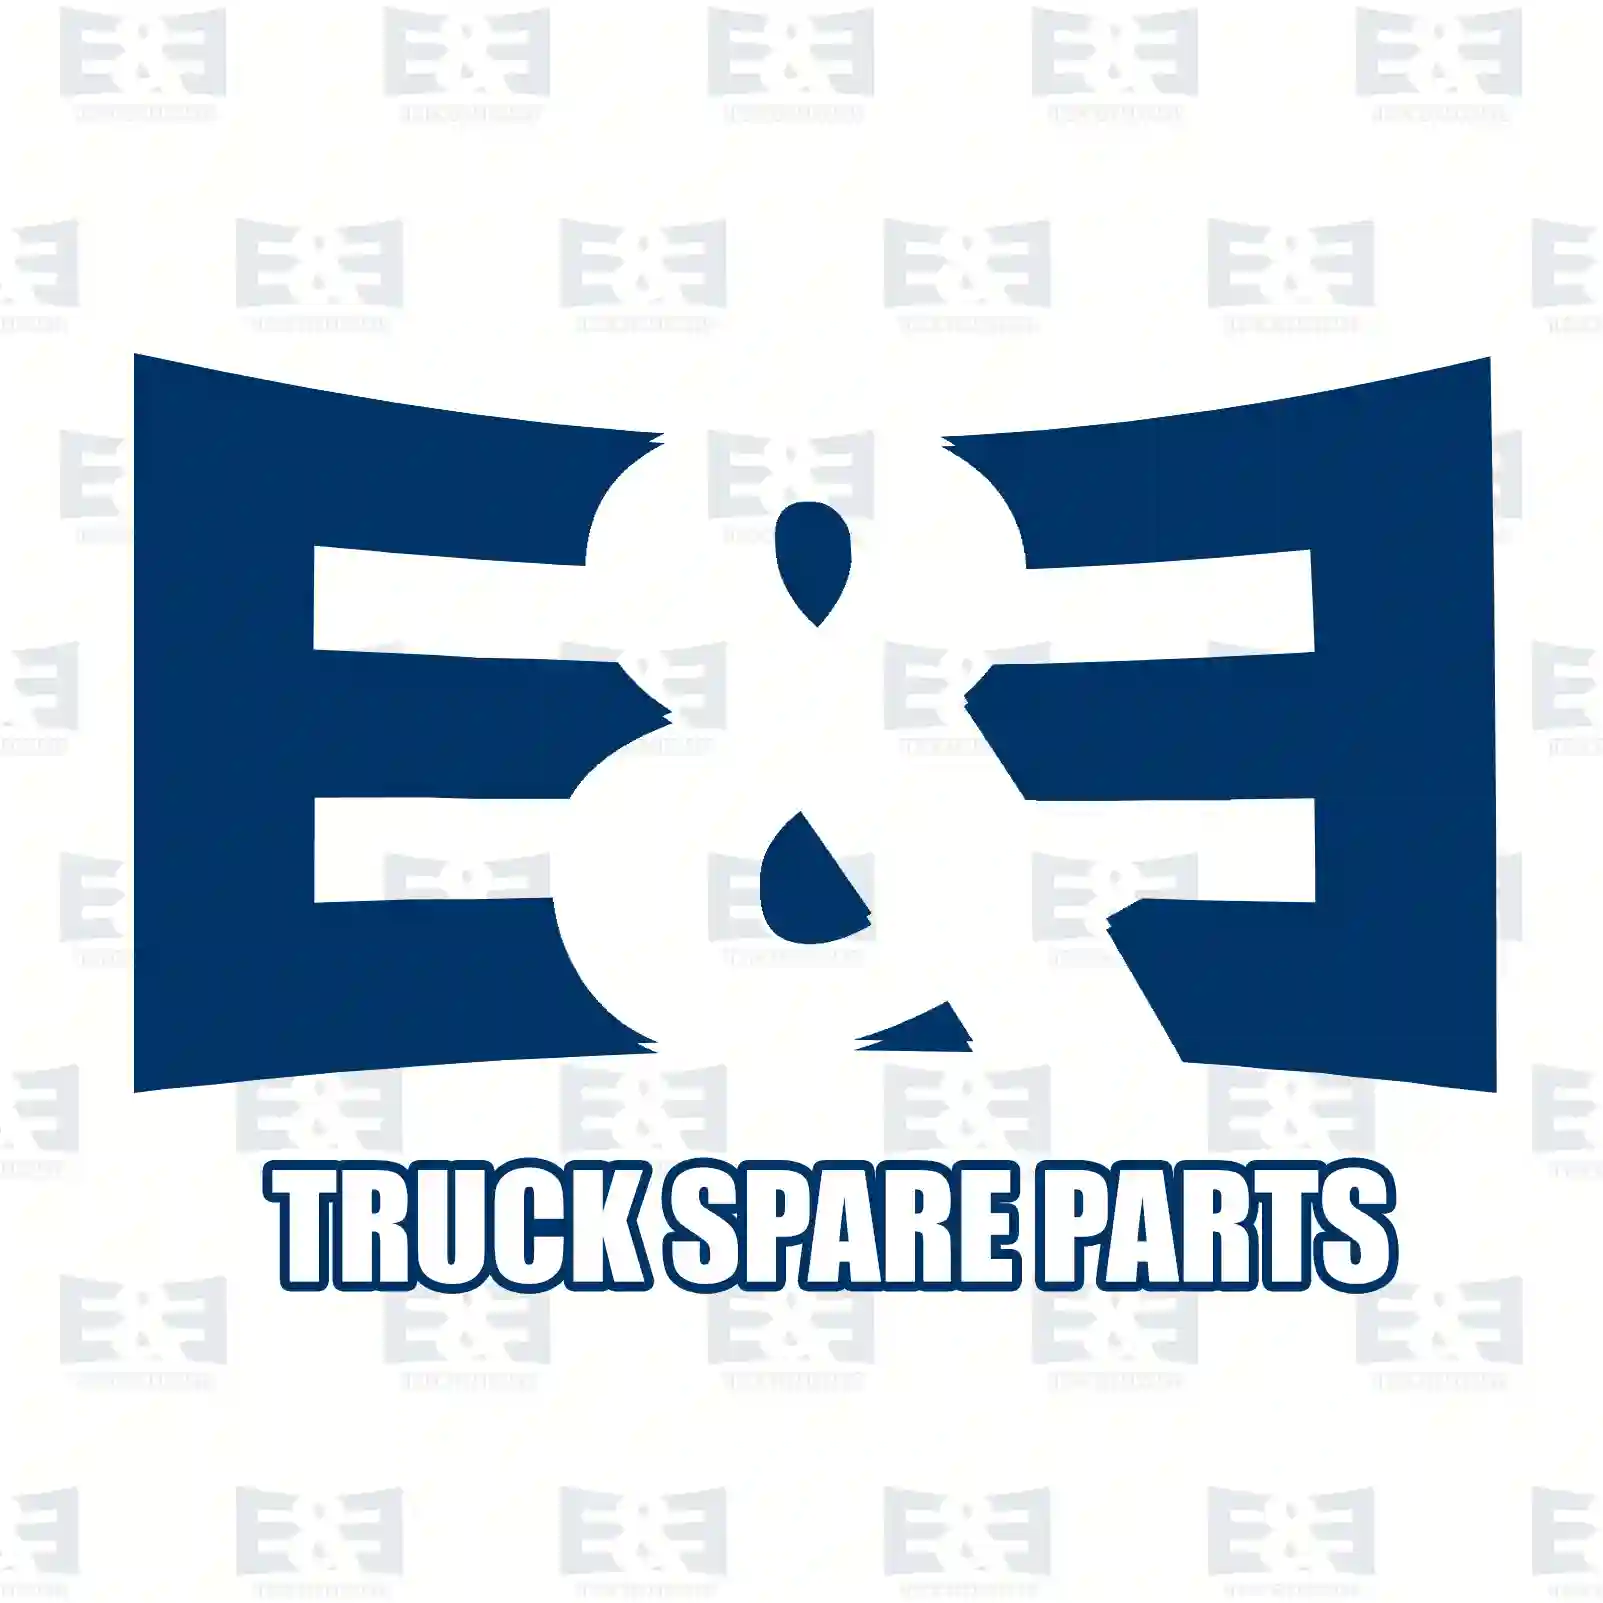 Suspension Buffer stop, EE No 2E2283791 ,  oem no:81414016036 E&E Truck Spare Parts | Truck Spare Parts, Auotomotive Spare Parts